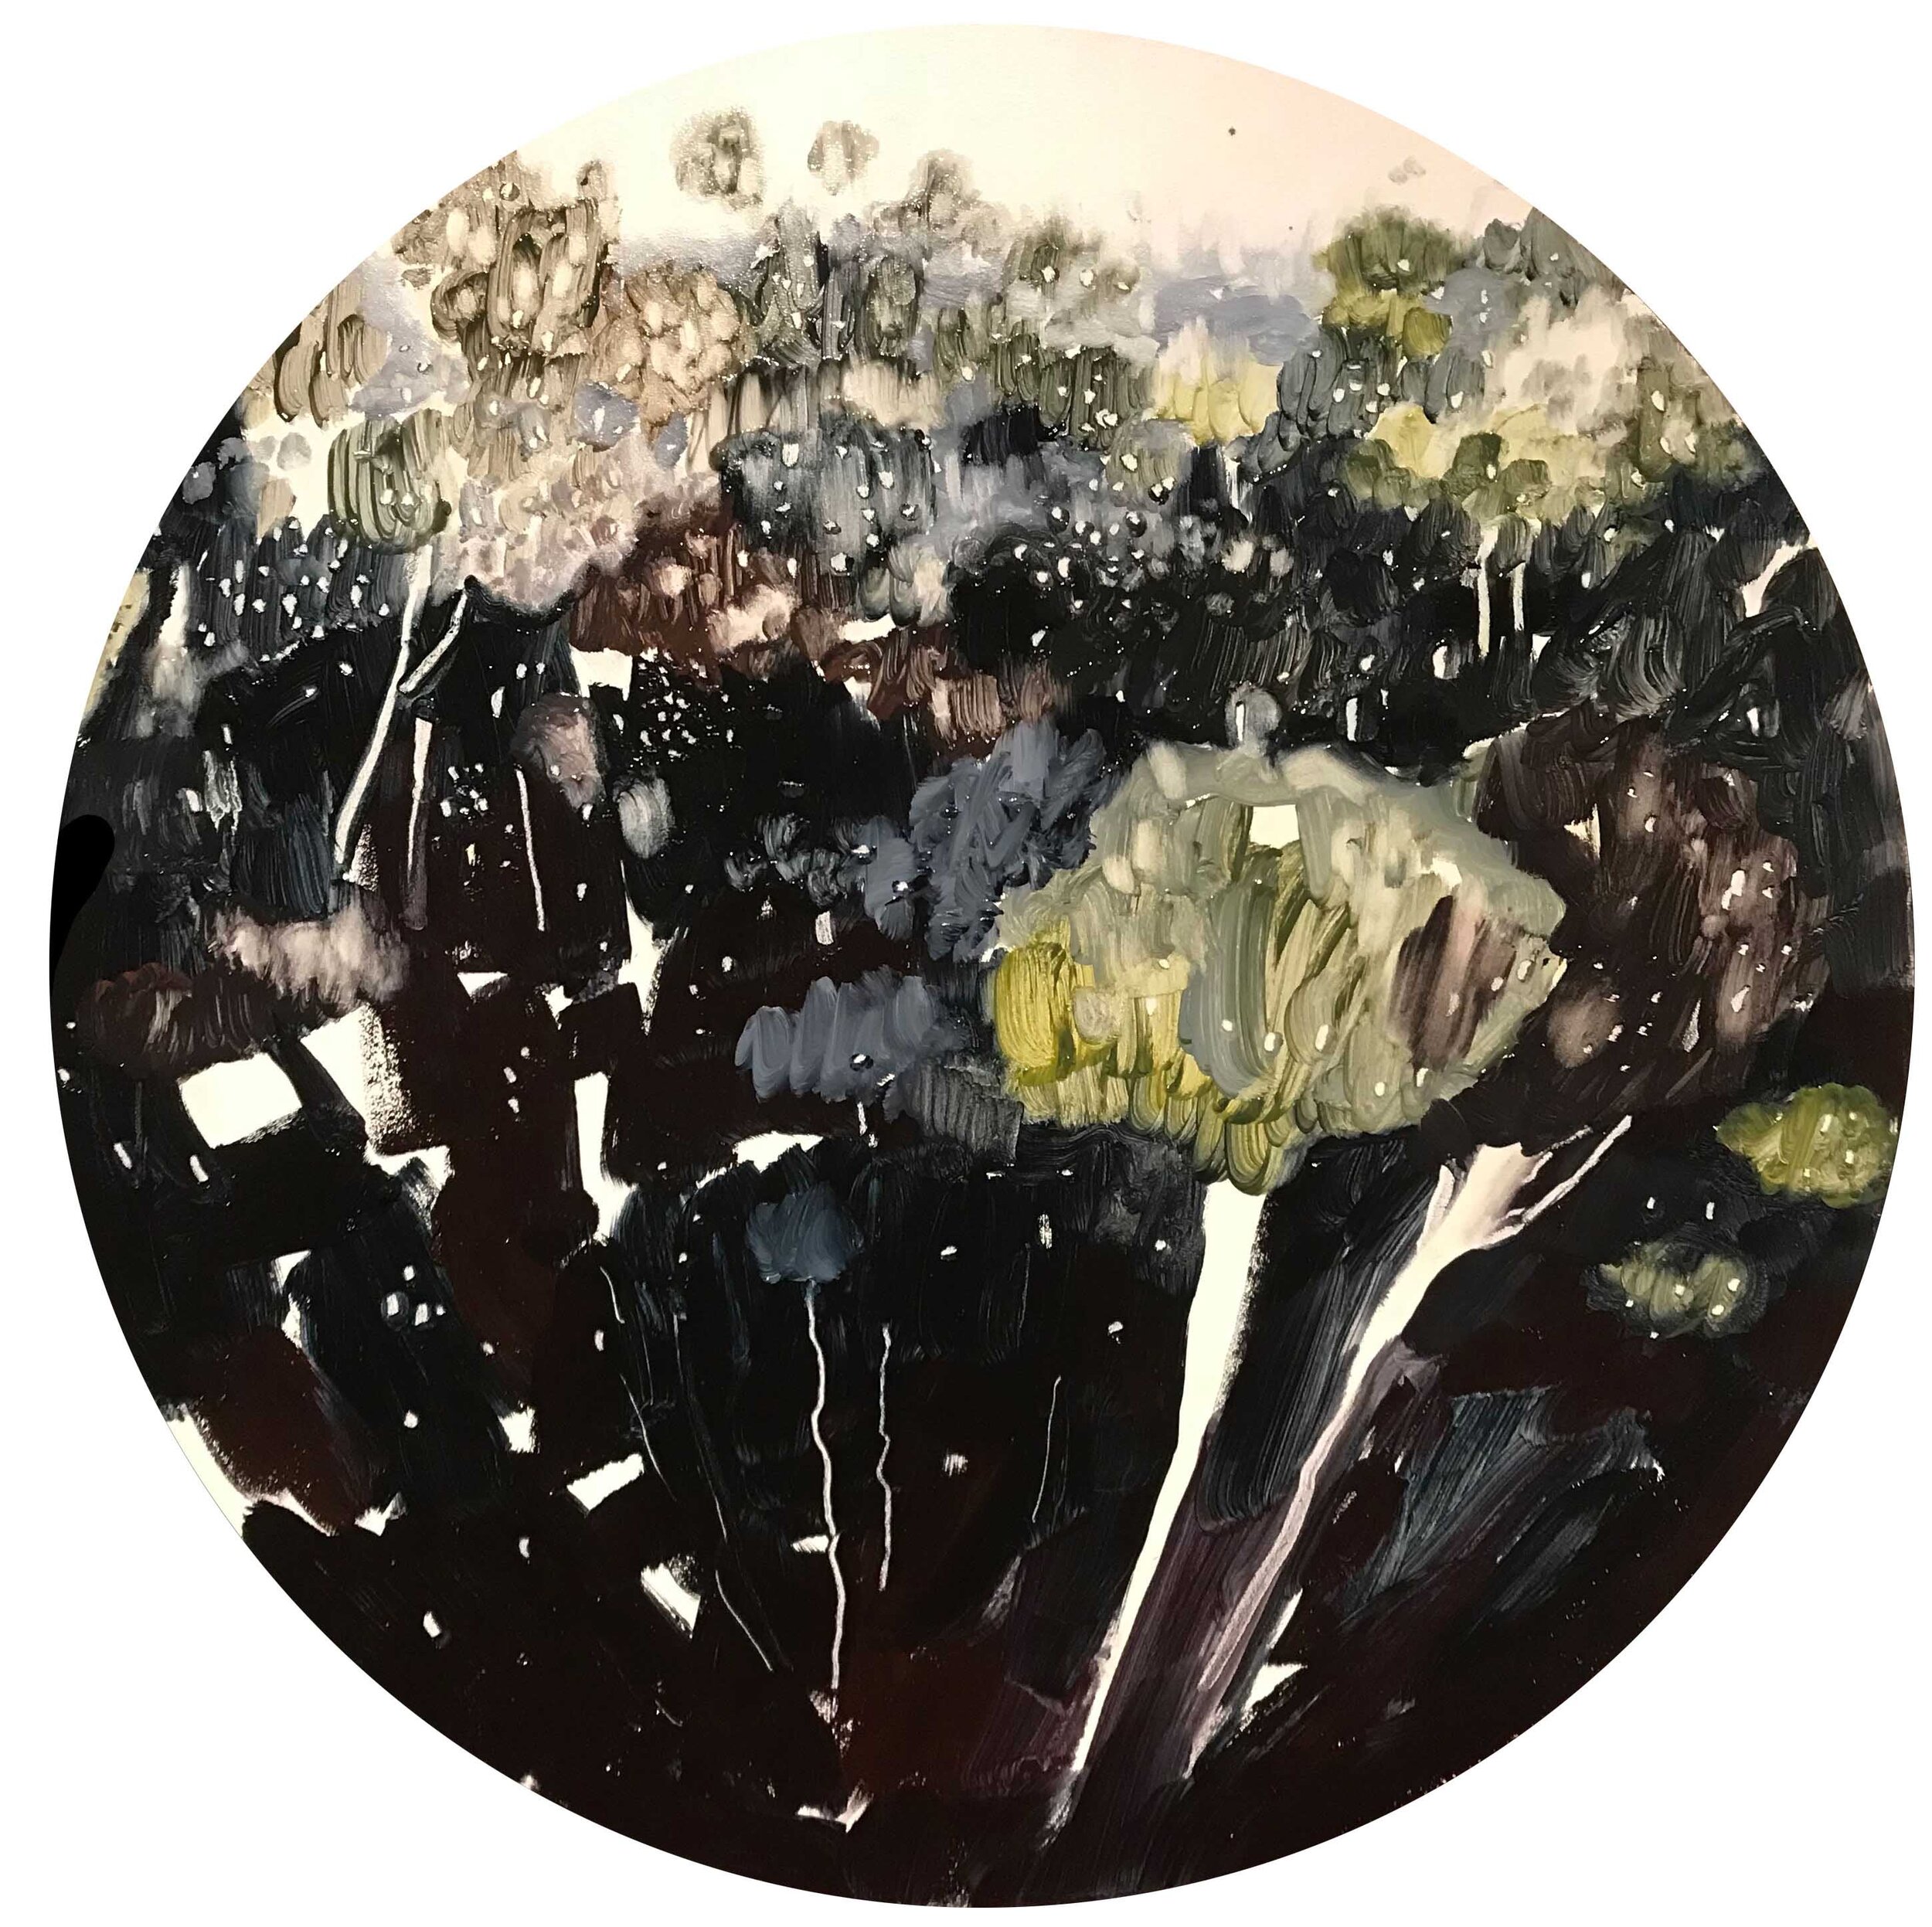  'Float i'. 2019. Oil on canvas board. 50cm diameter 